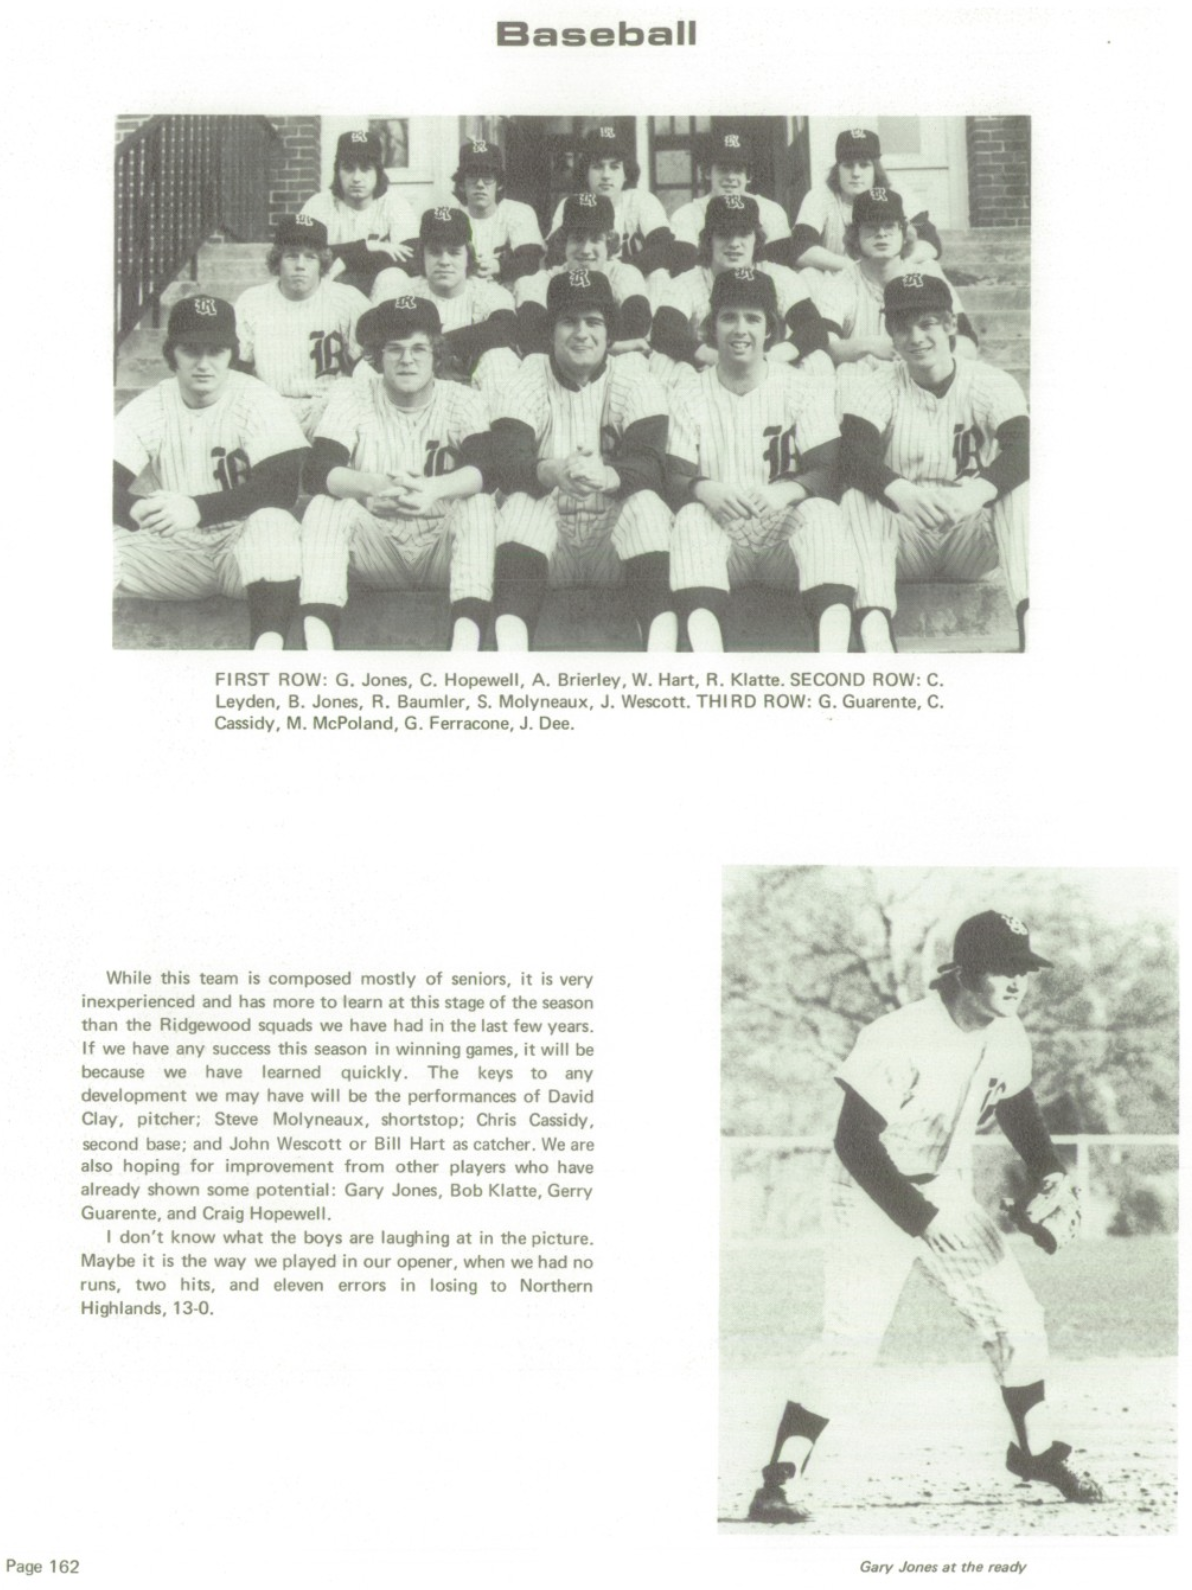 1973 Boys’ Baseball Team